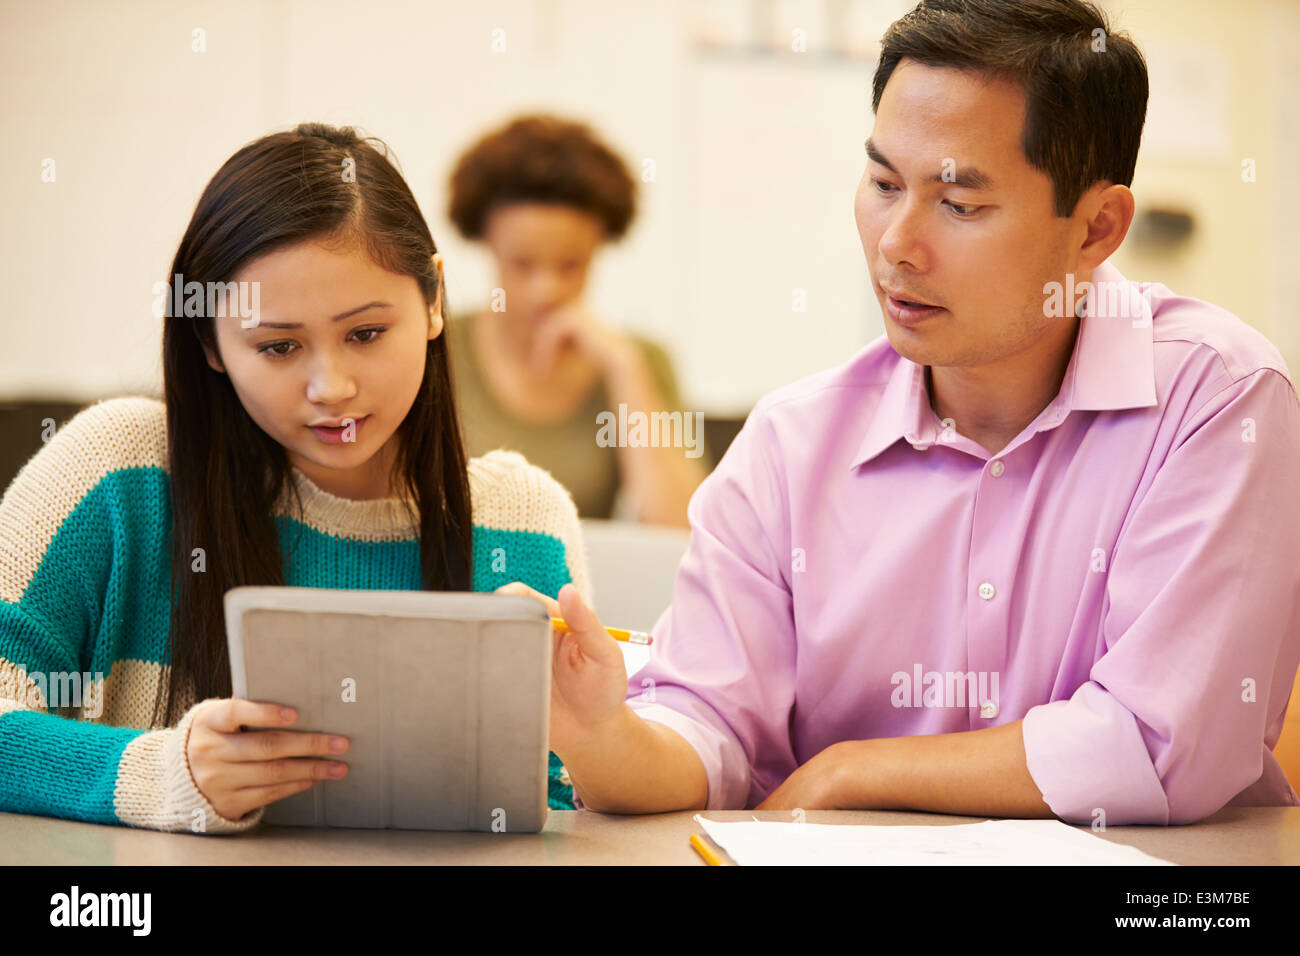 High School Student And Teacher Using Digital Tablet Stock Photo